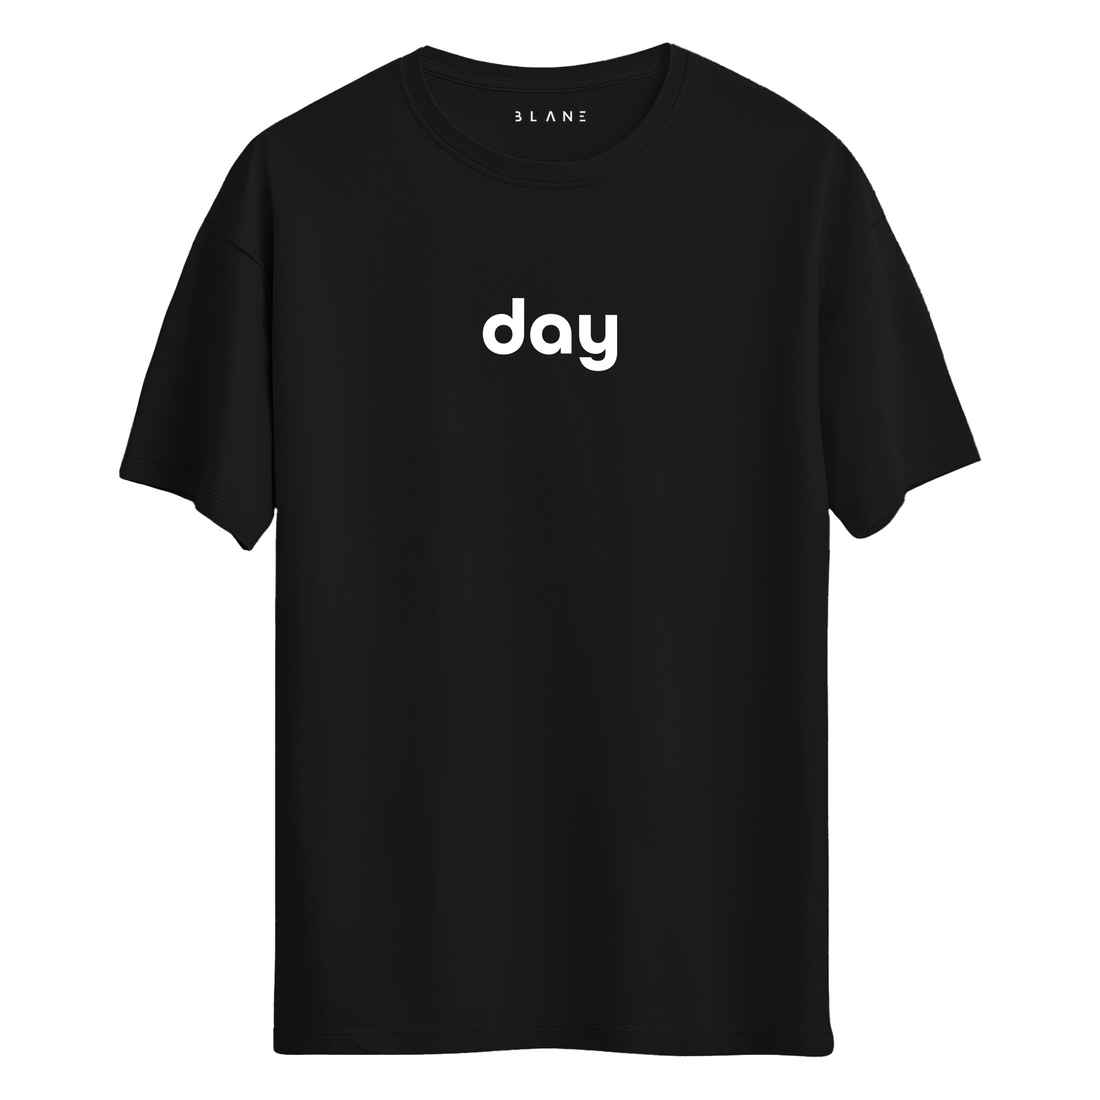 Day - T-Shirt